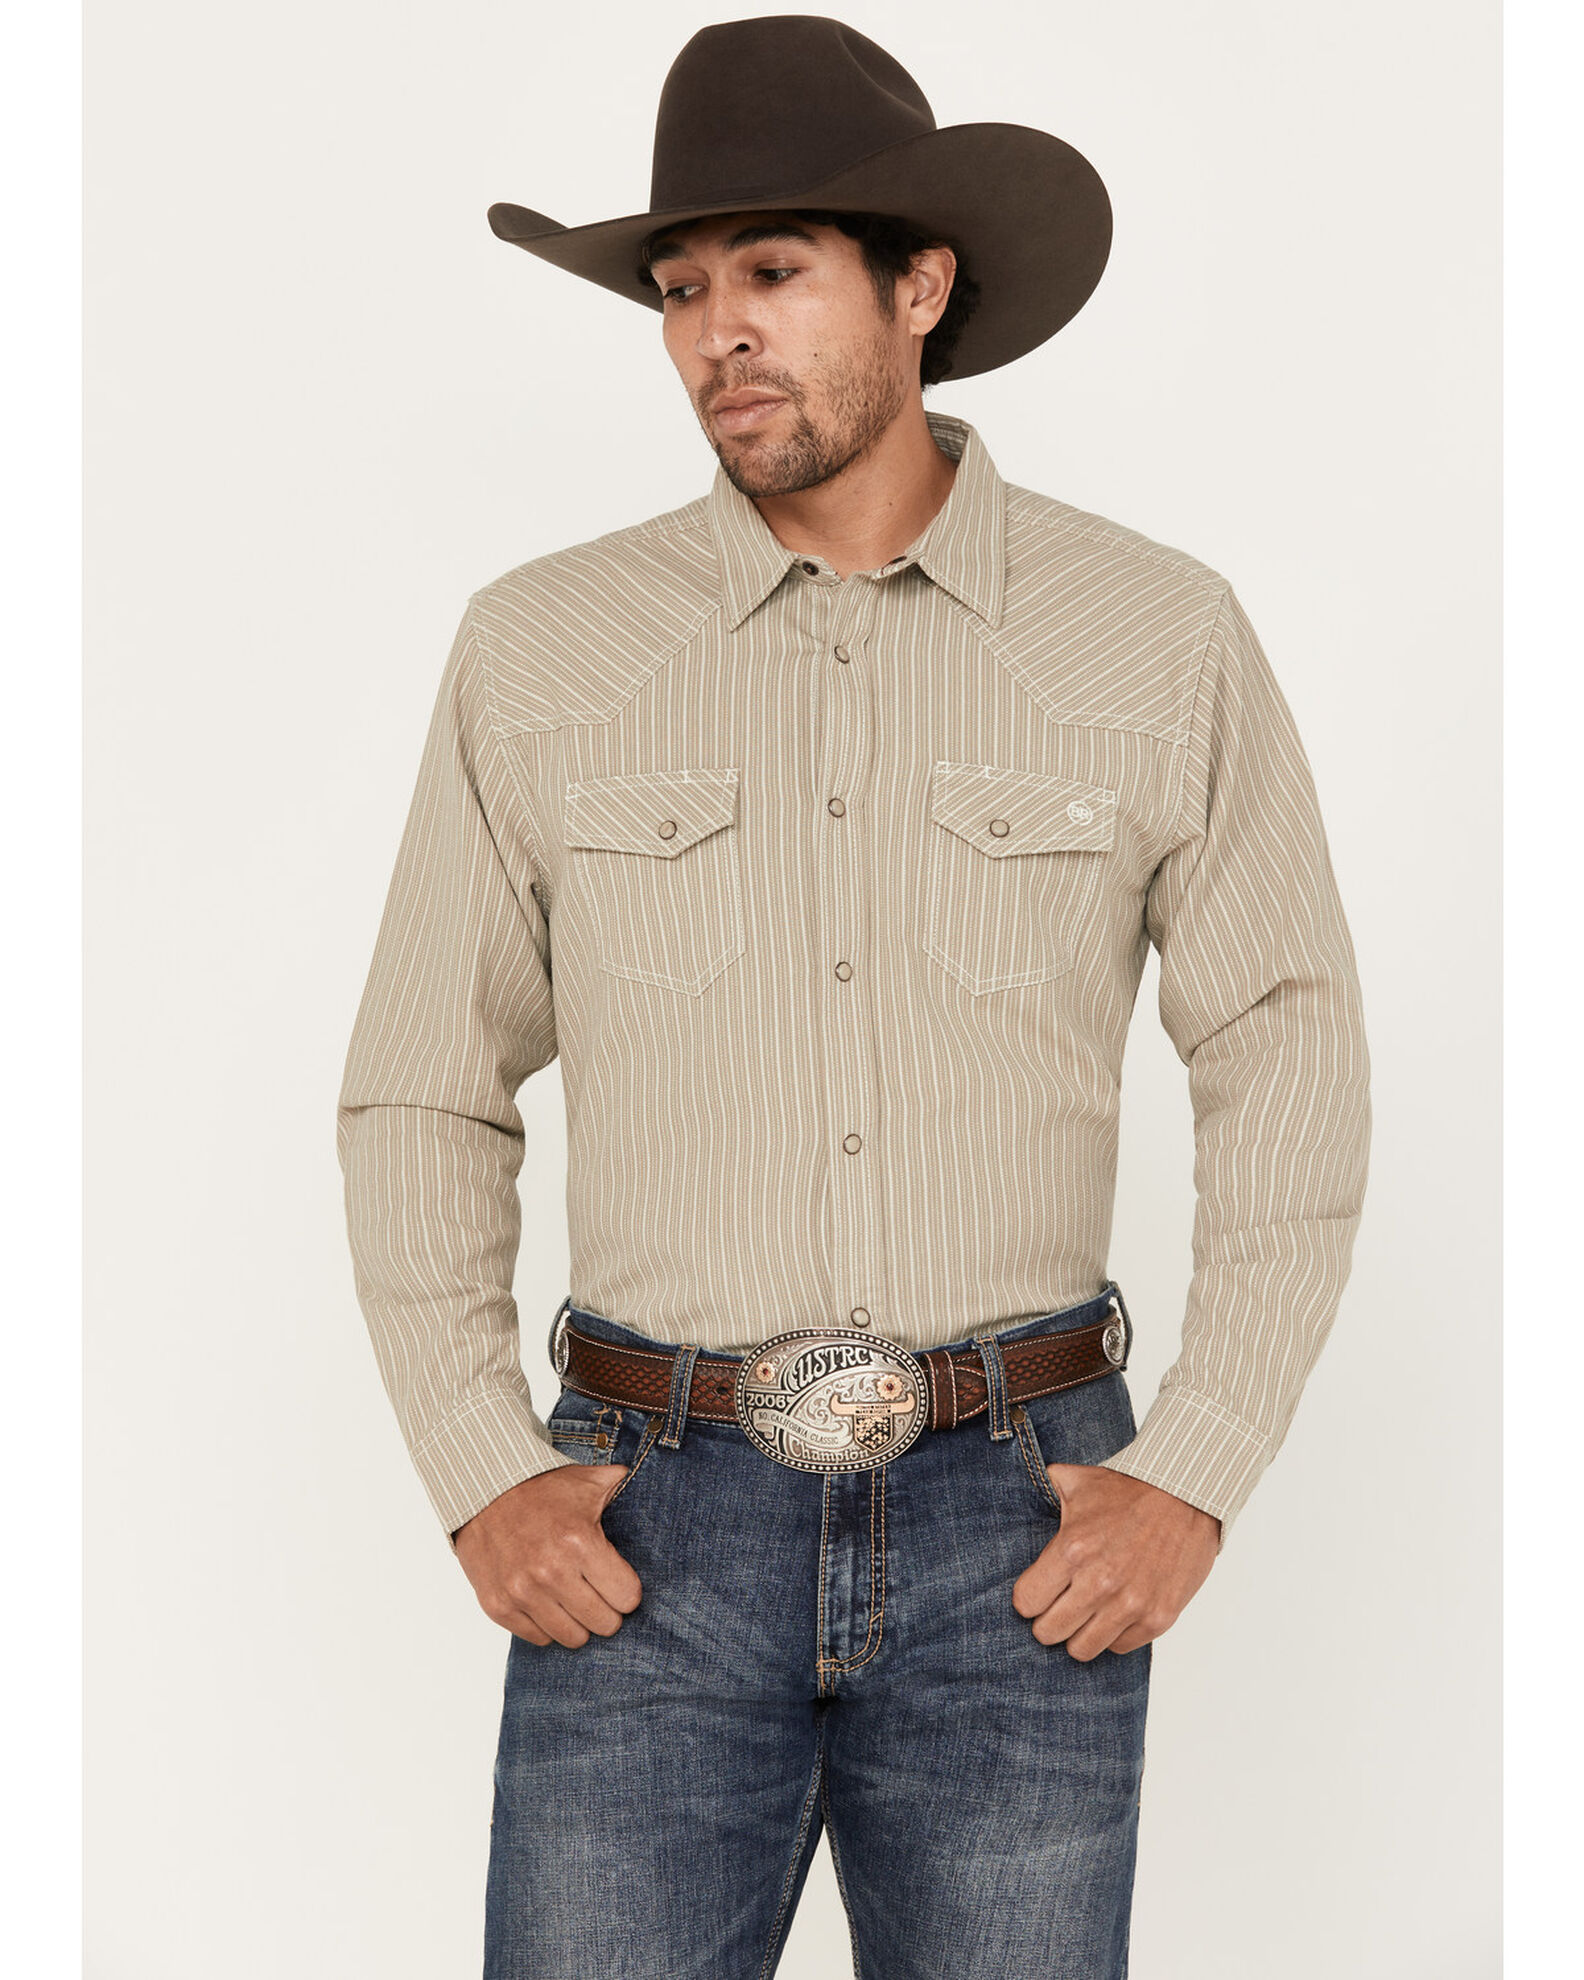 Blue Ranchwear Men's Denim Dobby Striped Long Sleeve Western Pearl Snap Shirt